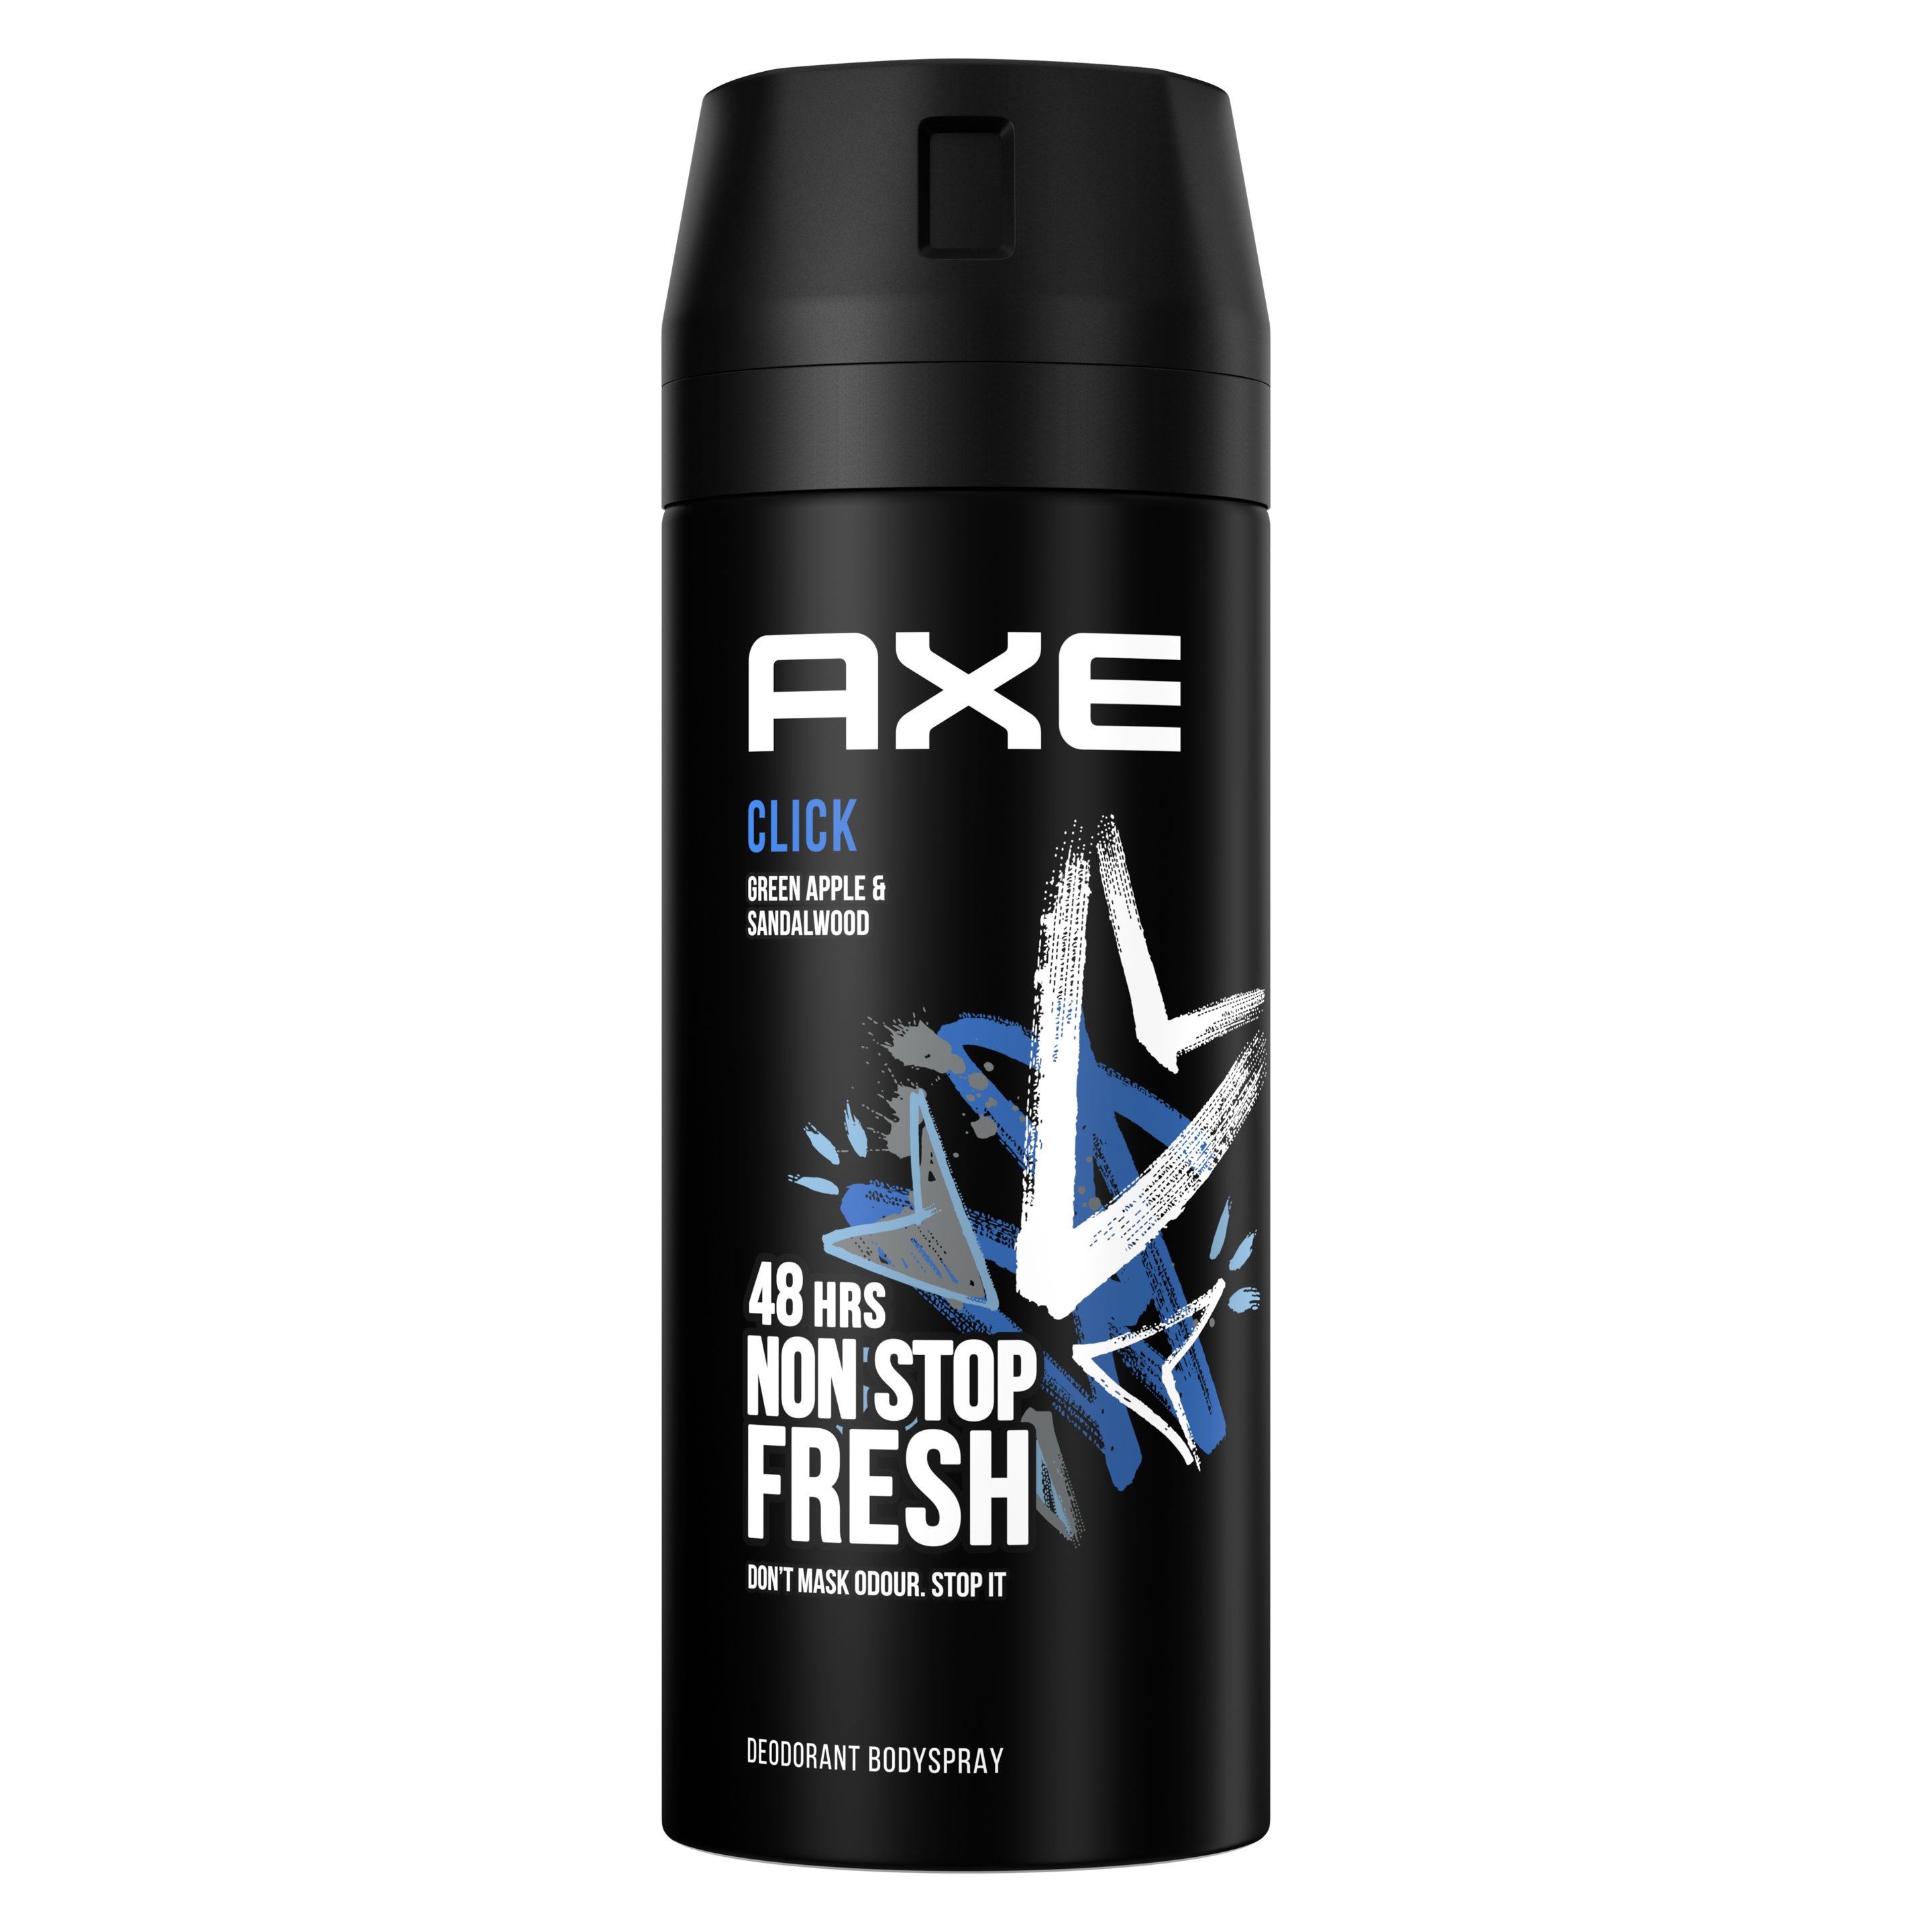 Дезодорант Axe excite 150мл. Део-спрей Axe non stop Fresh 150 мл. Спрей акс Линкс. Axe дезодорант body Spray. Мужской дезодорант от пота